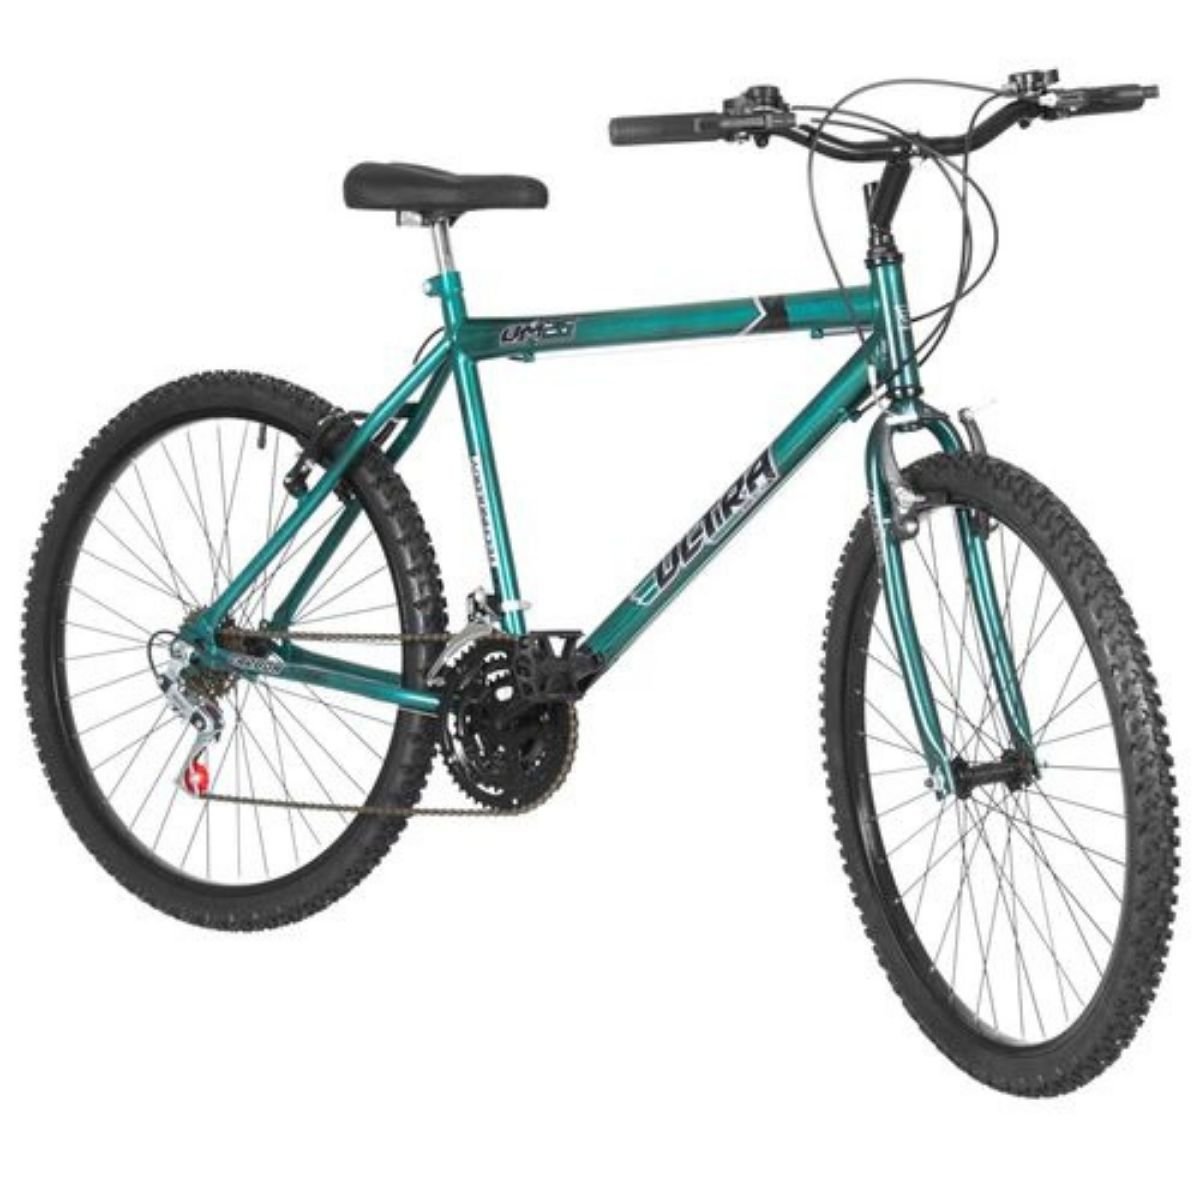 Bicicleta 26 18v UM26 Ultra bikes - Verde - 2